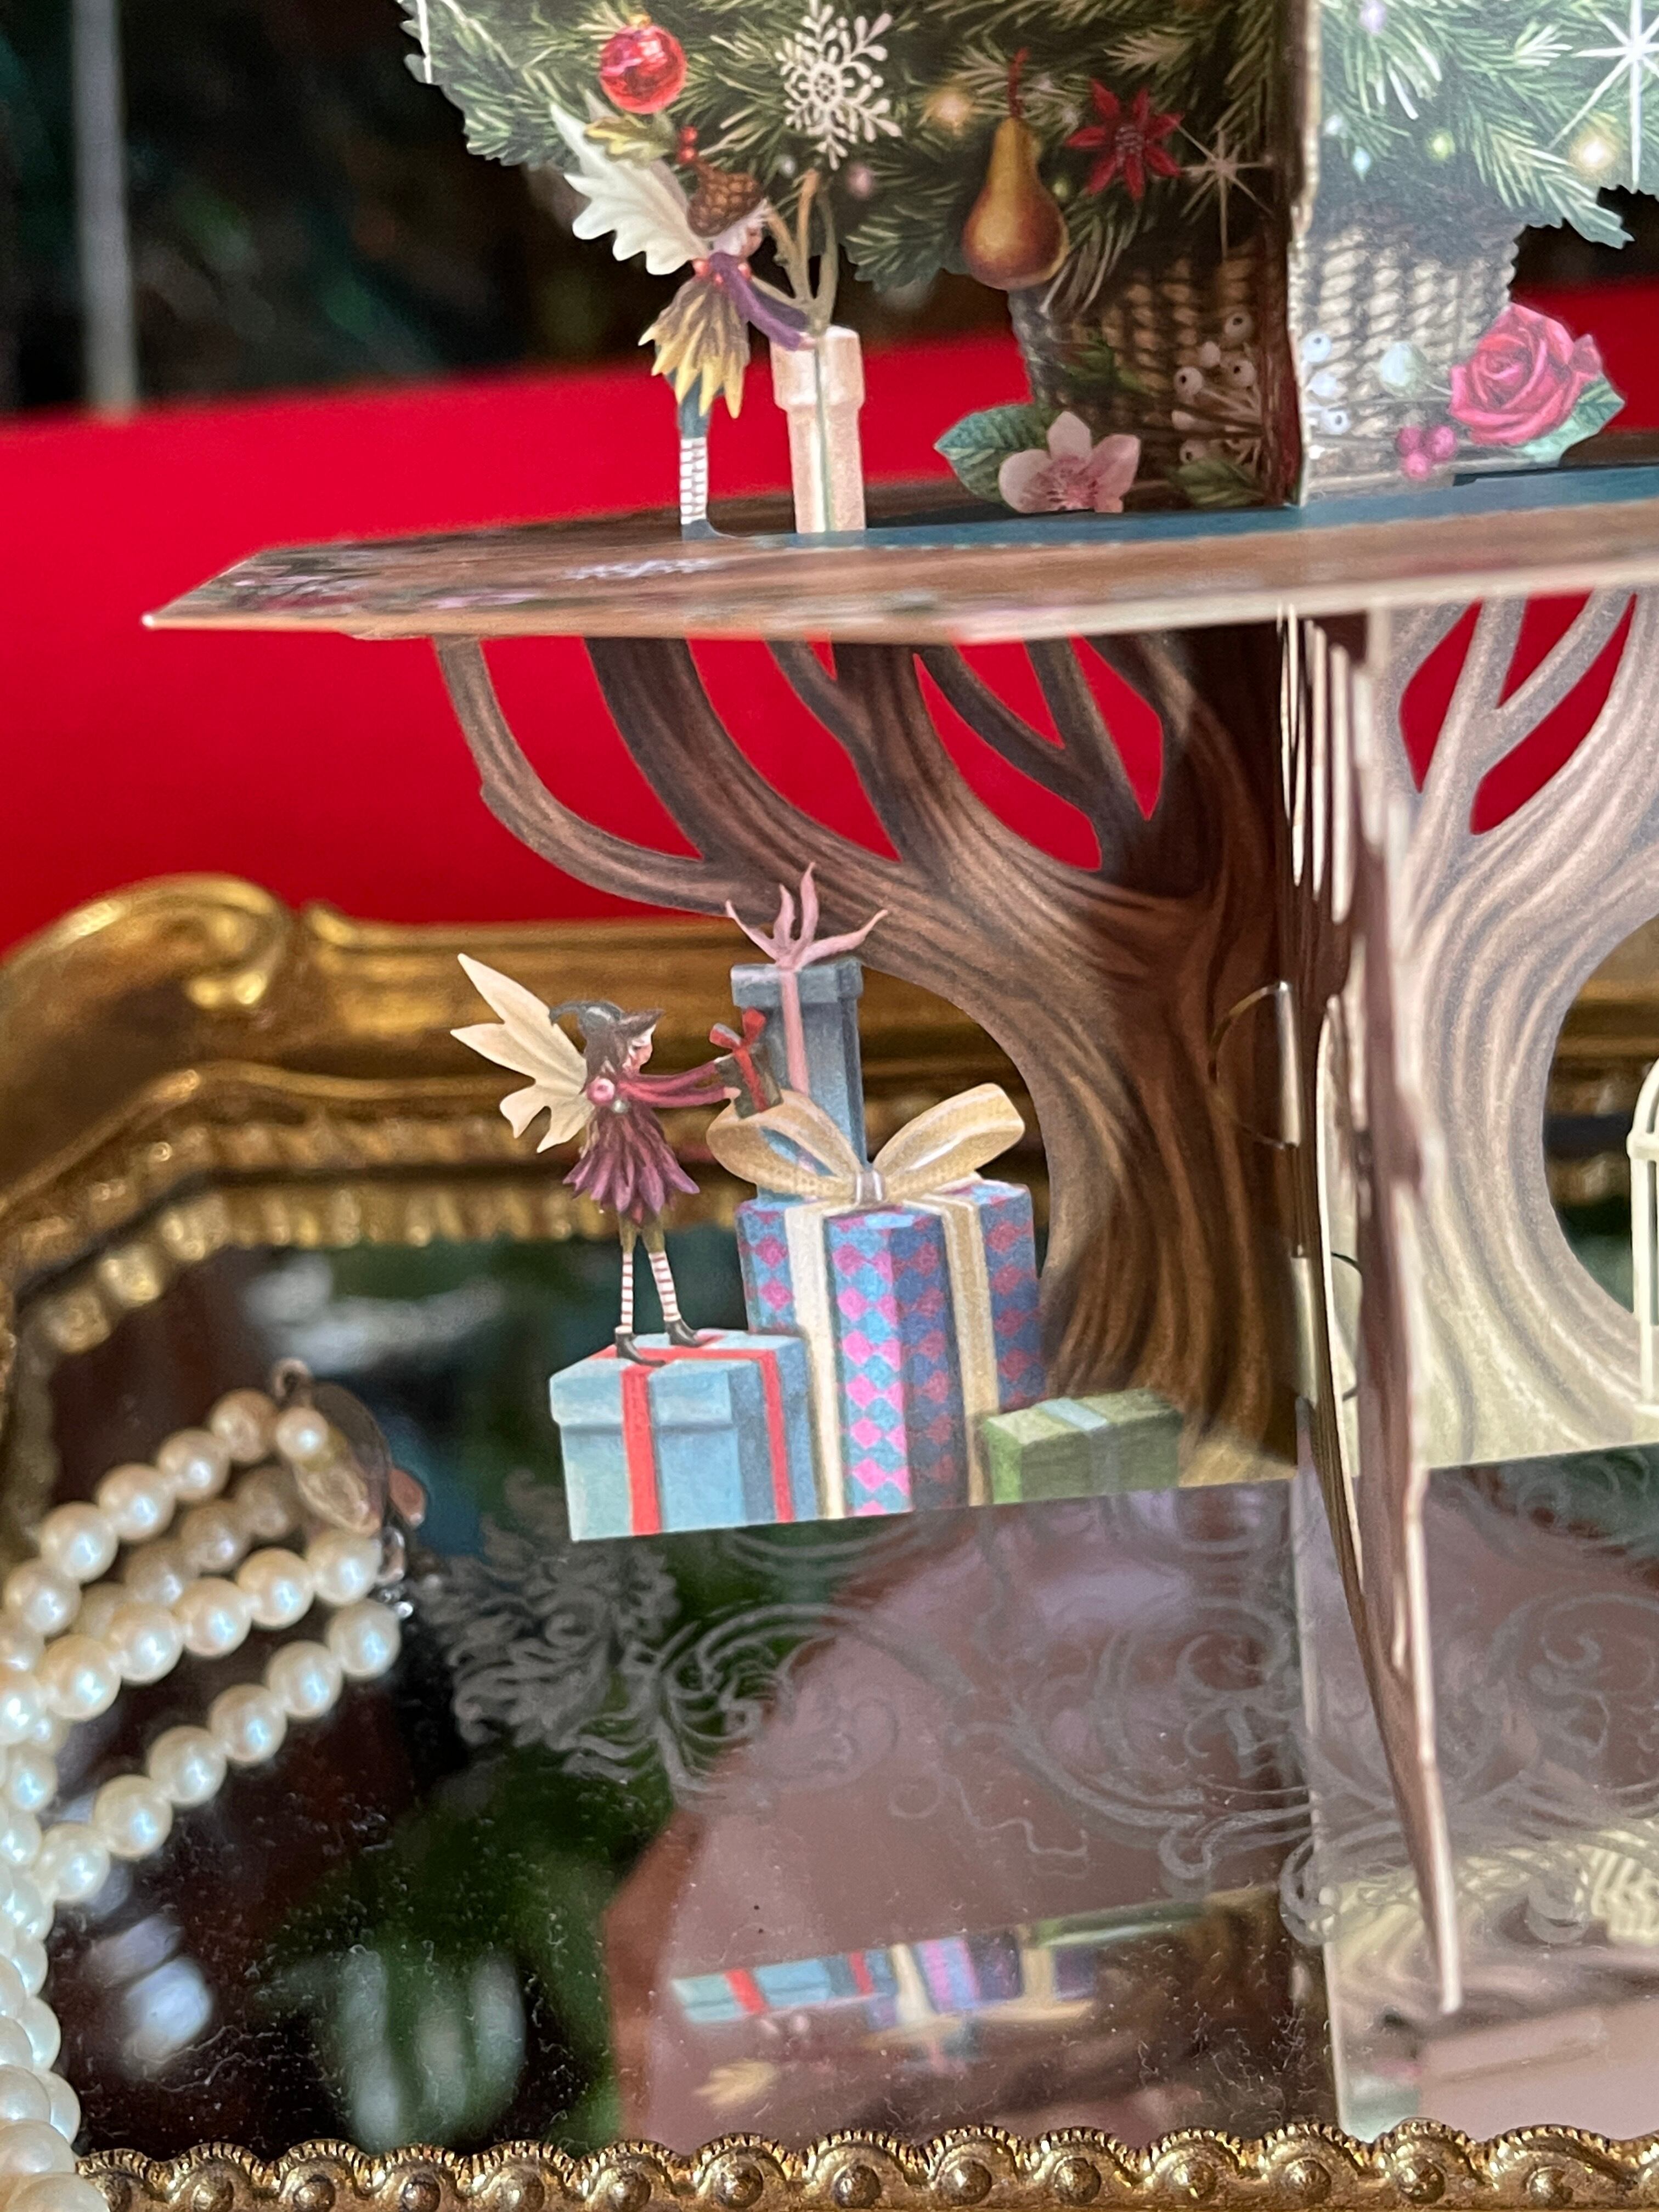 『Me & McQ』クリスマスツリーと妖精 Fairy Table 3D Christmas Card グリーティングカード イギリスより